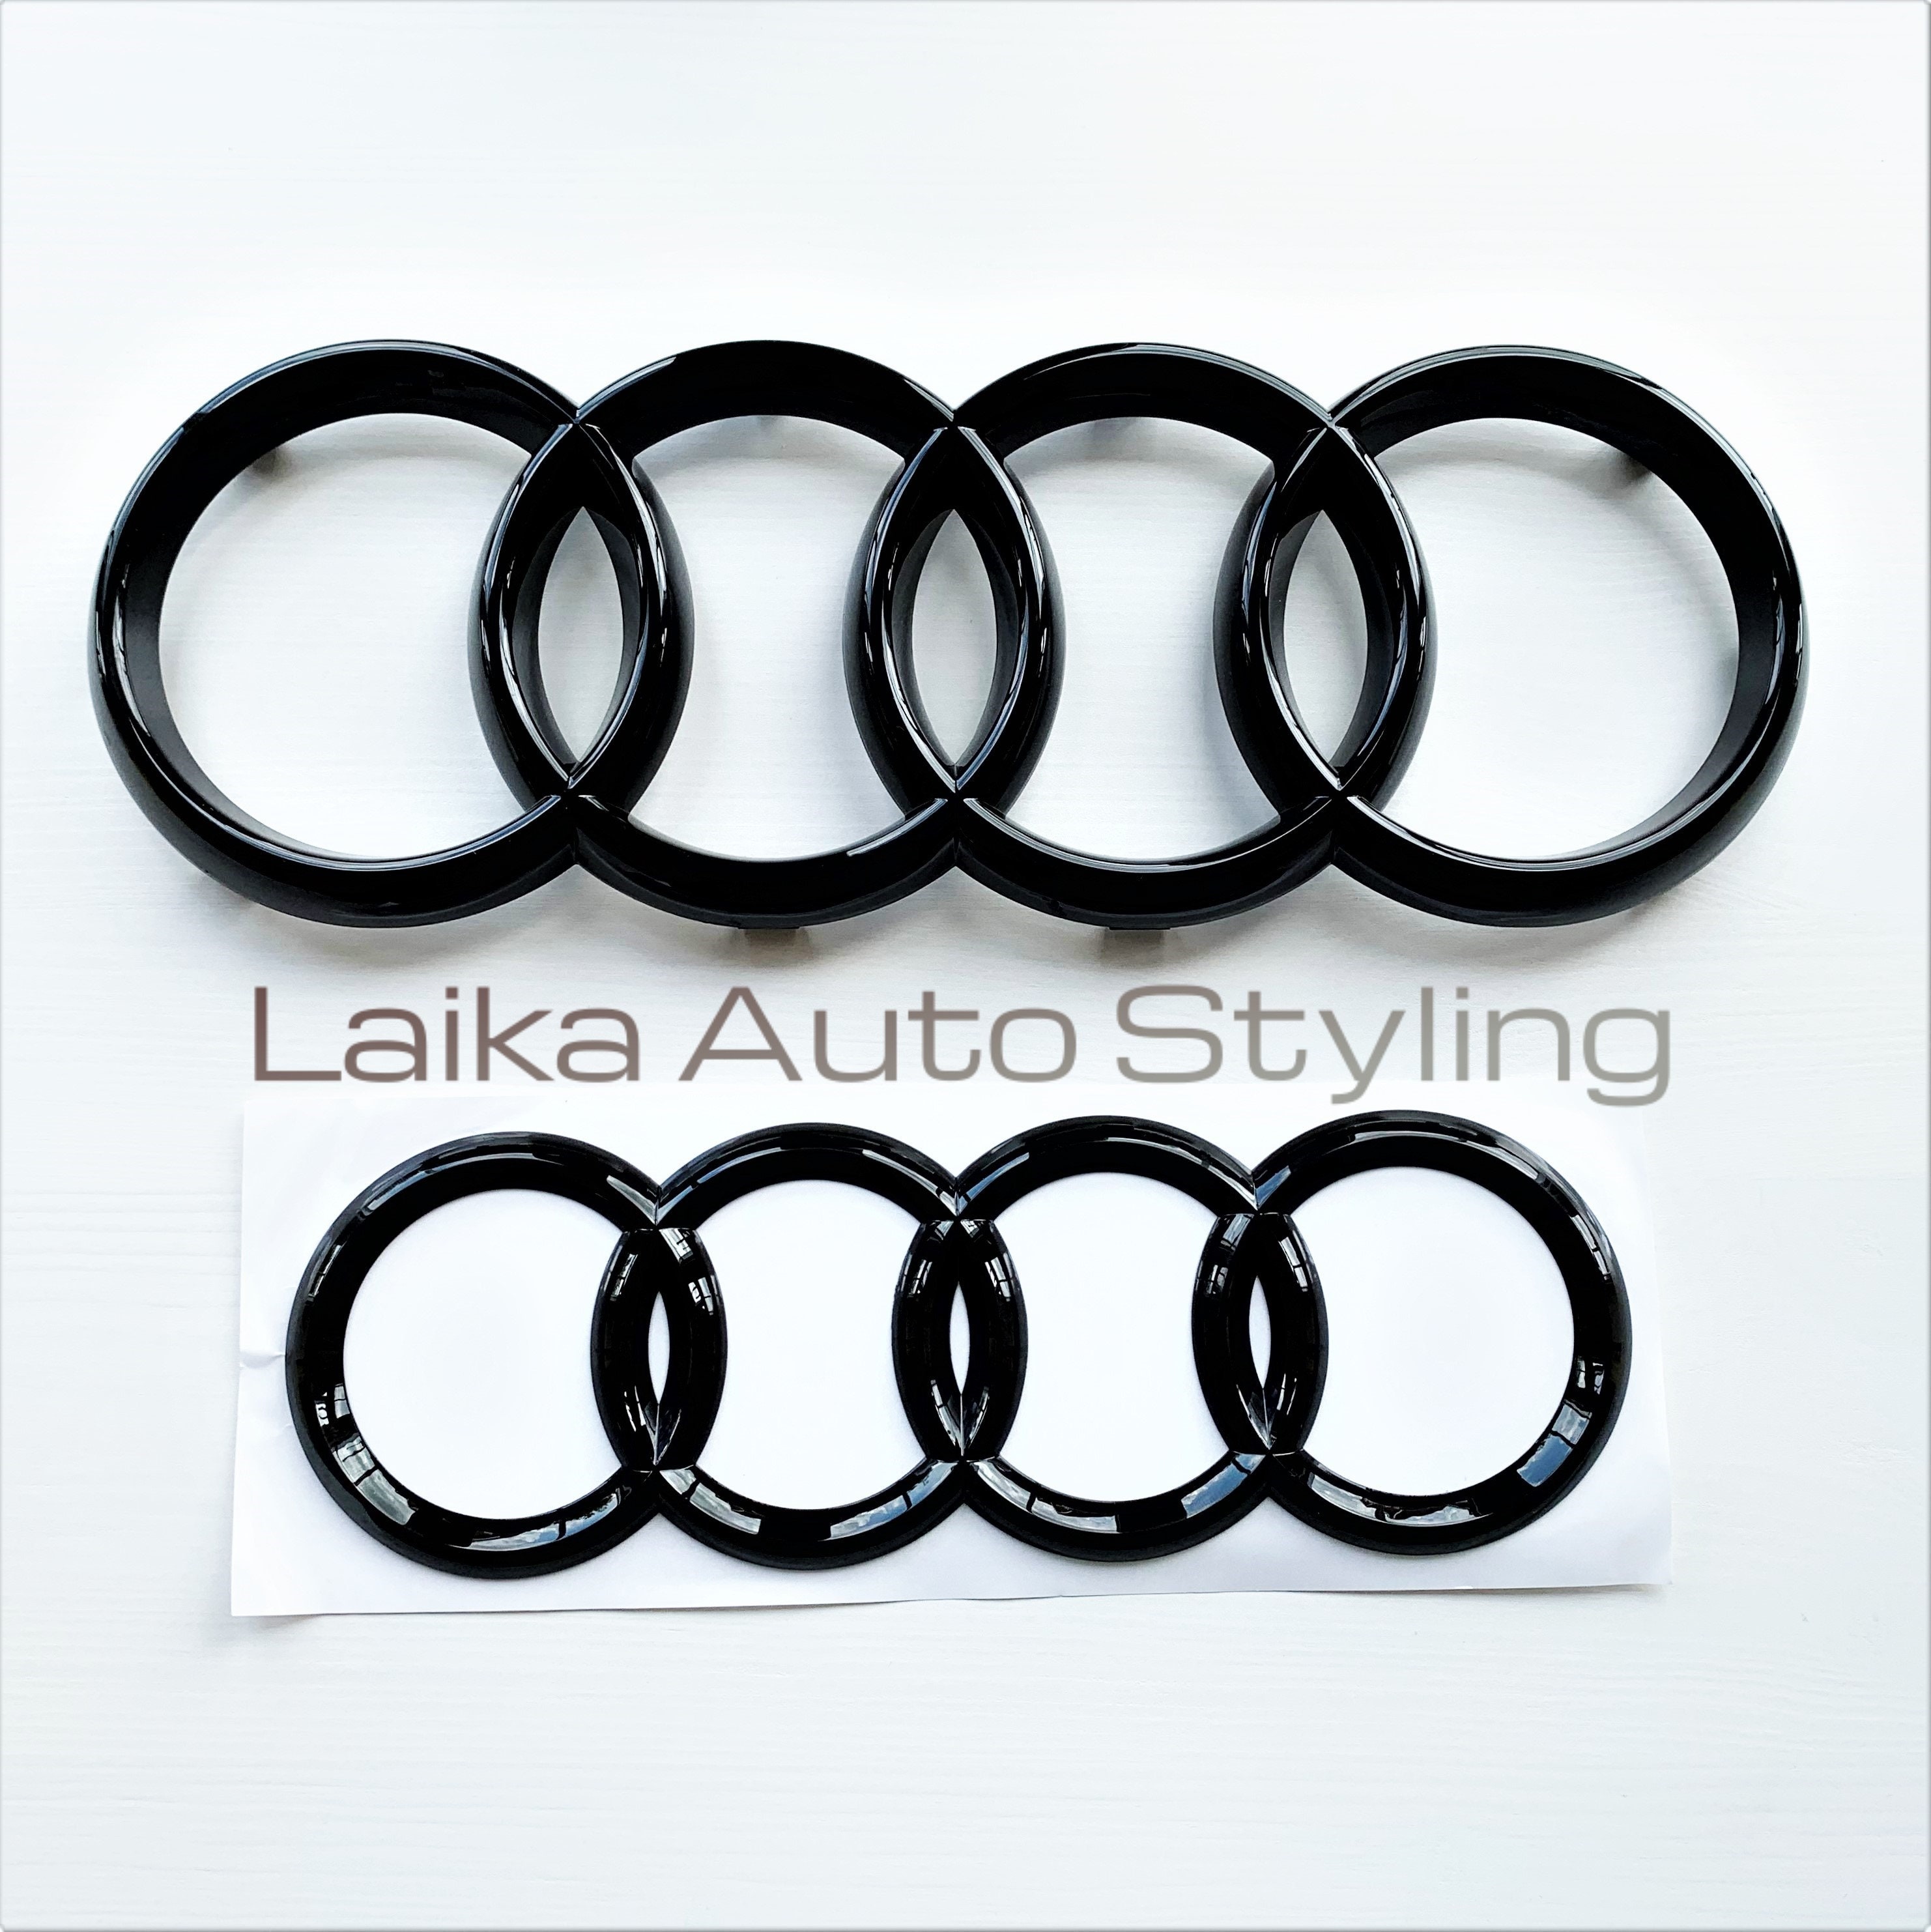 Buy Black Audi Rings Emblem Online In India -  India